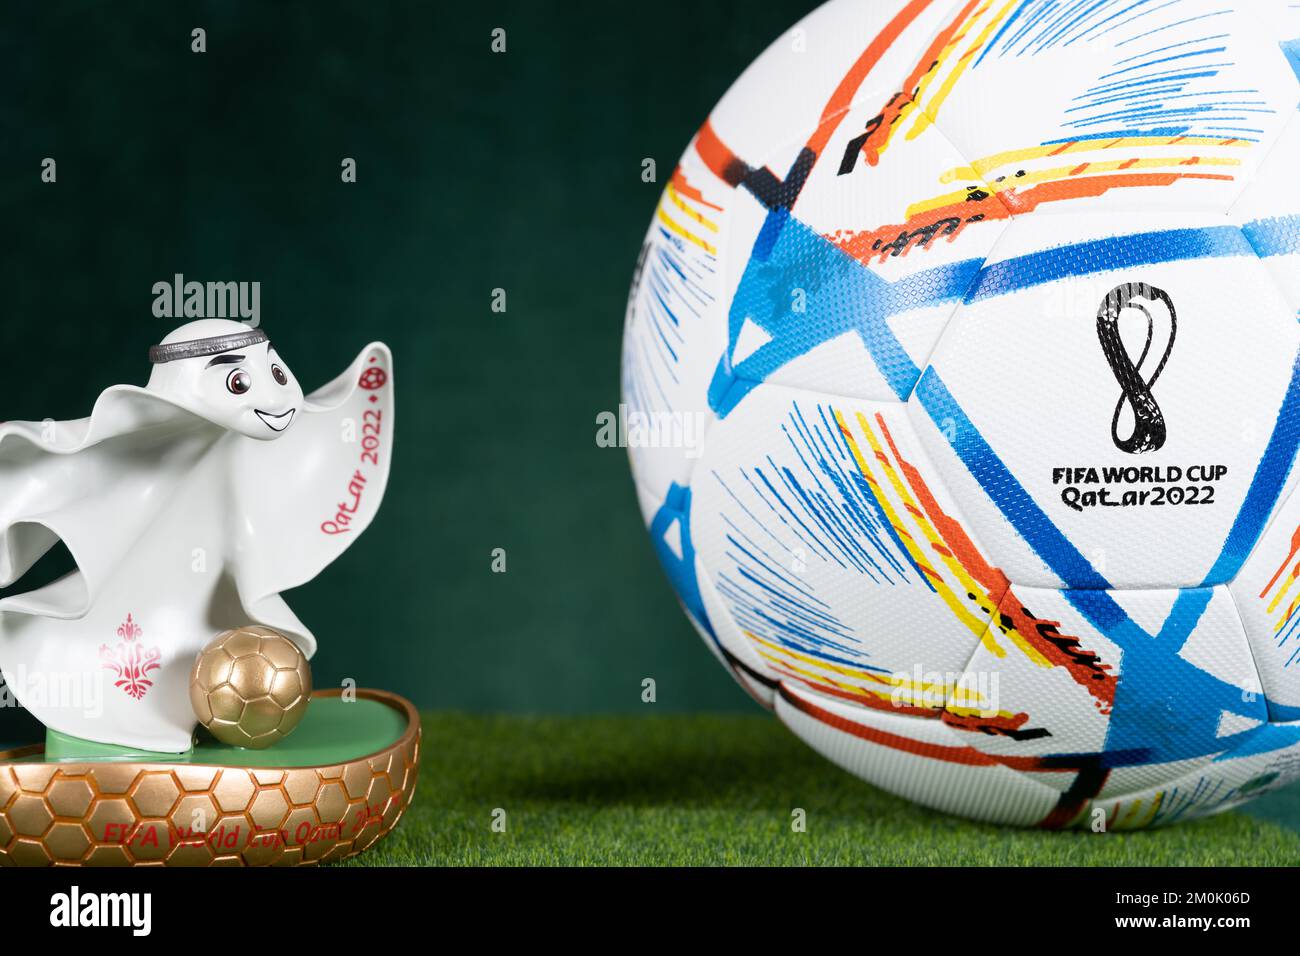 Is La'eeb a Strategic Mascot? (The Official Mascot of FIFA World